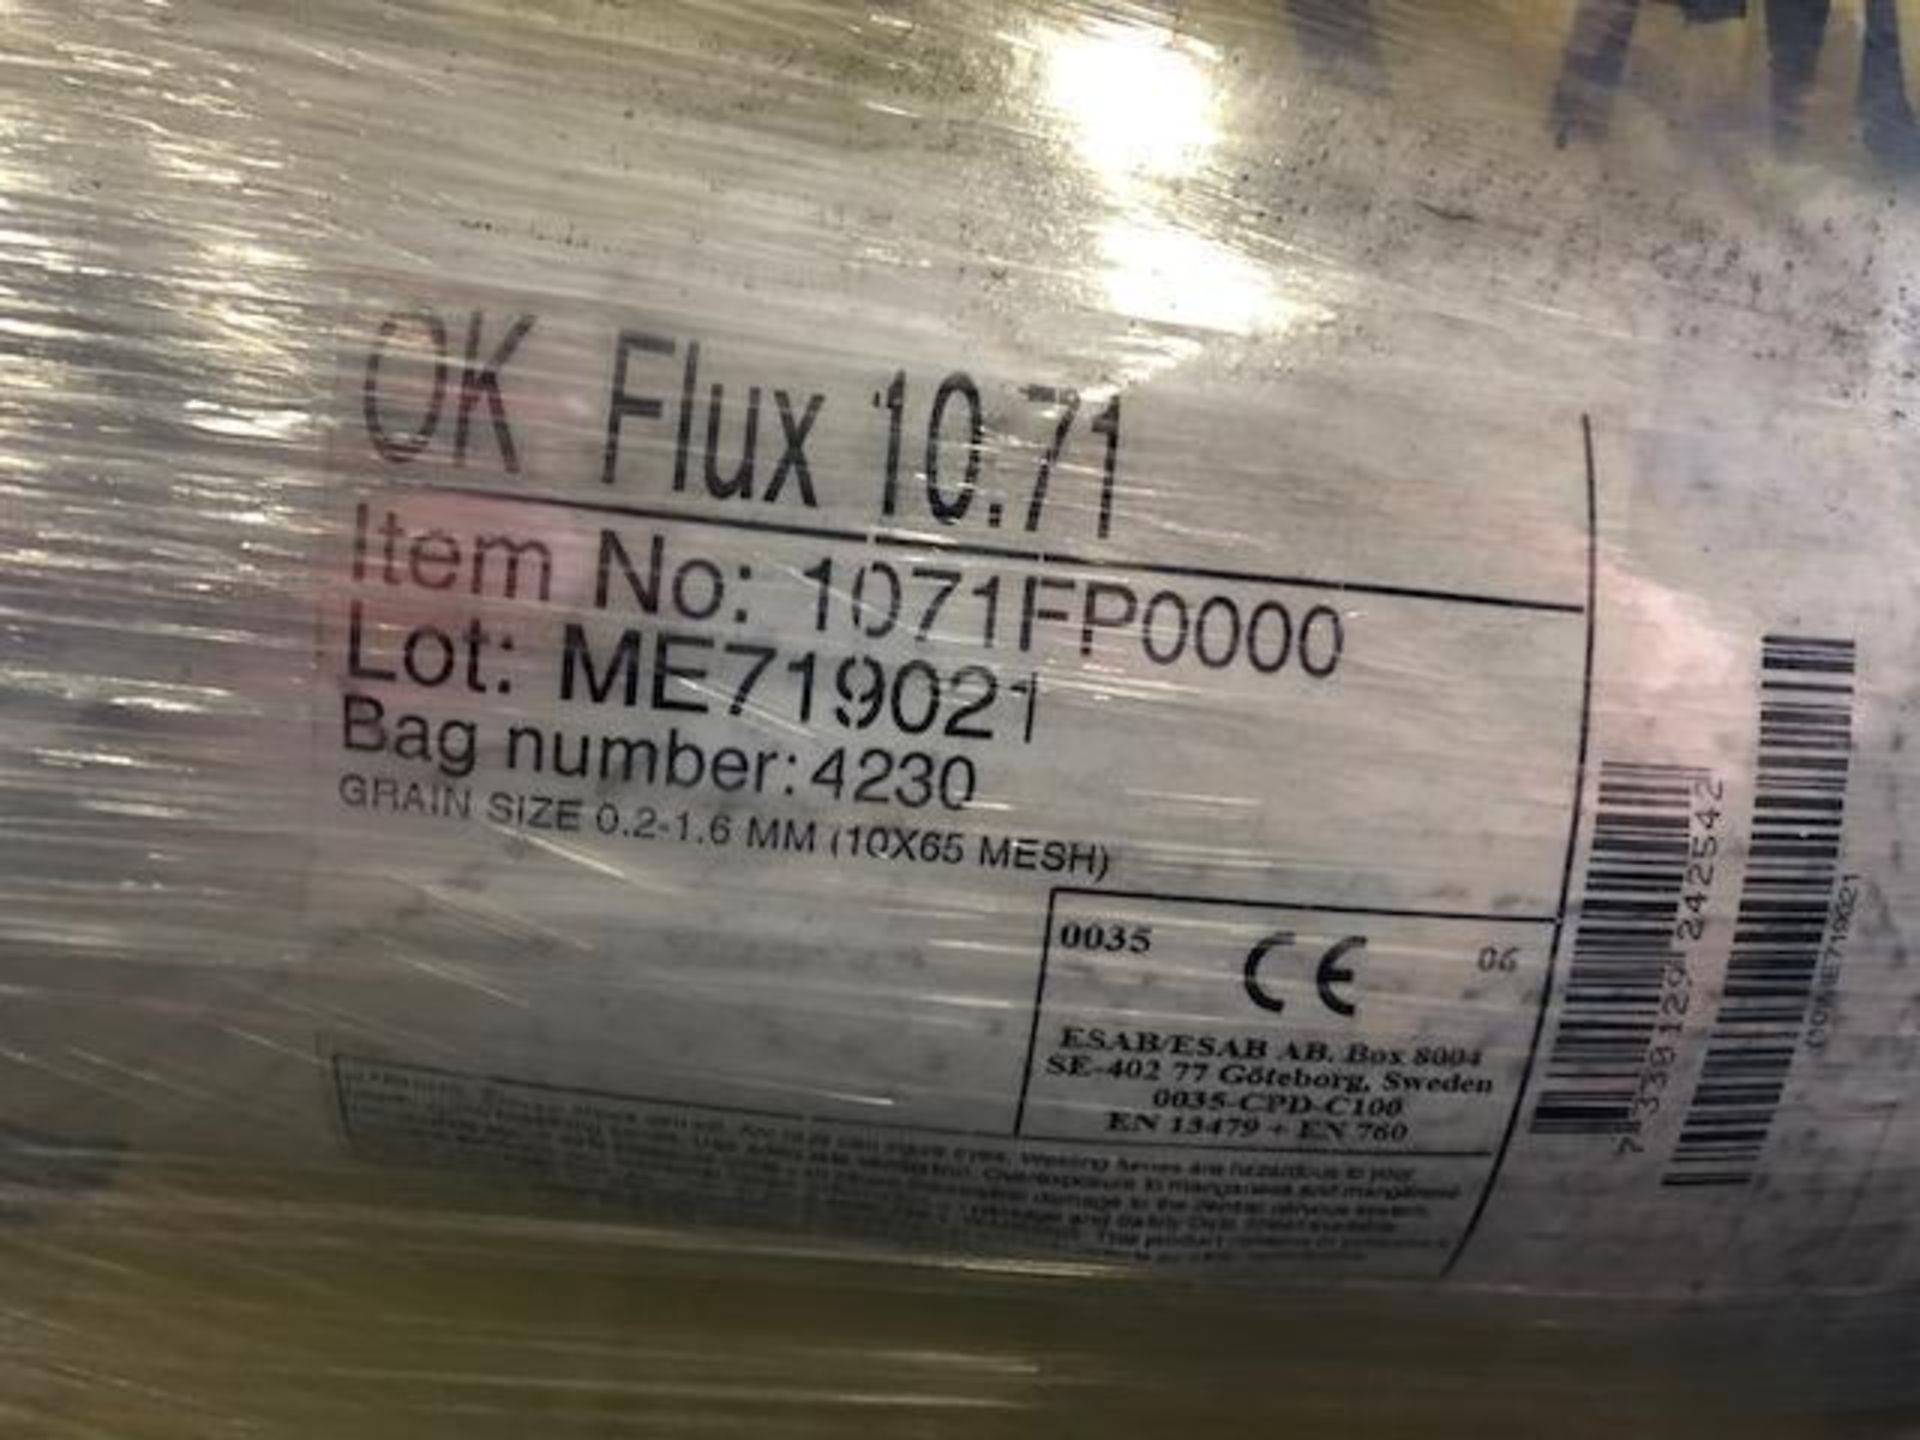 PALLET OF NEW OK FLUX 10.7, GRAIN SIZE 0.2-1.6 MM (10x65 MESH) - Image 6 of 6